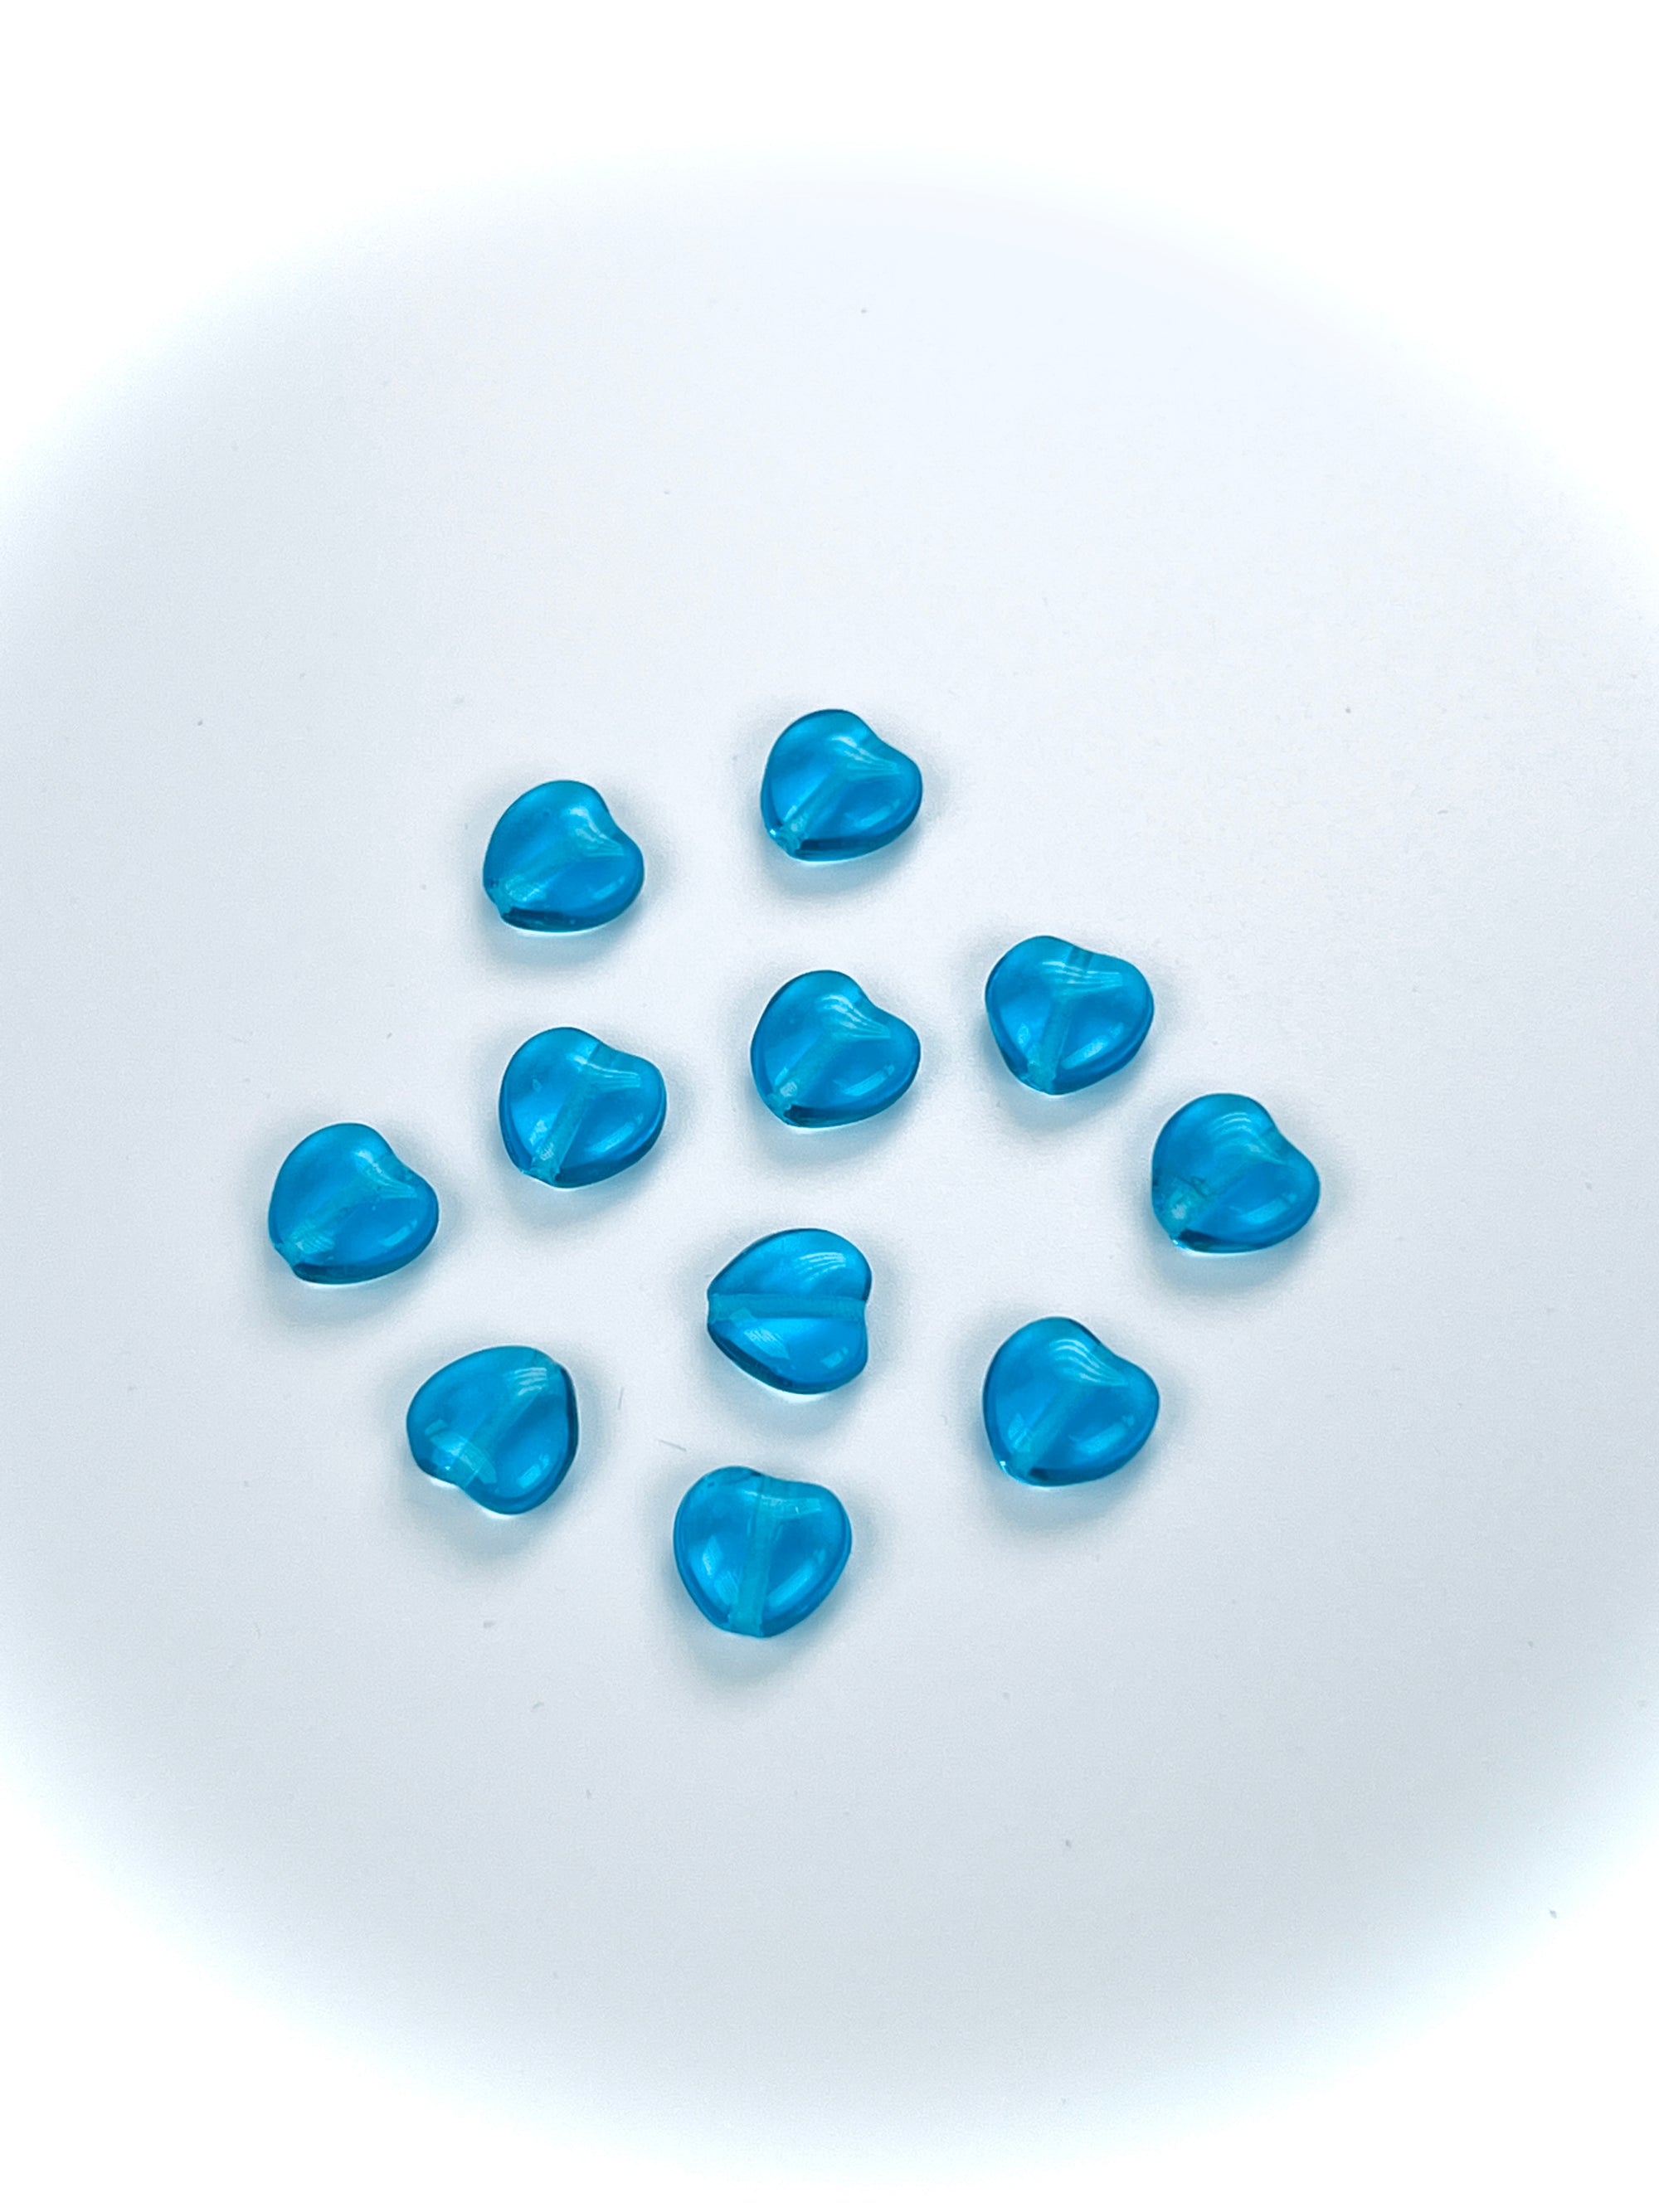 Czech glass Heart shaped druk beads 8x8mm Medium Aqua color, blue, Loose Pressed Beads, 50 pcs, J067